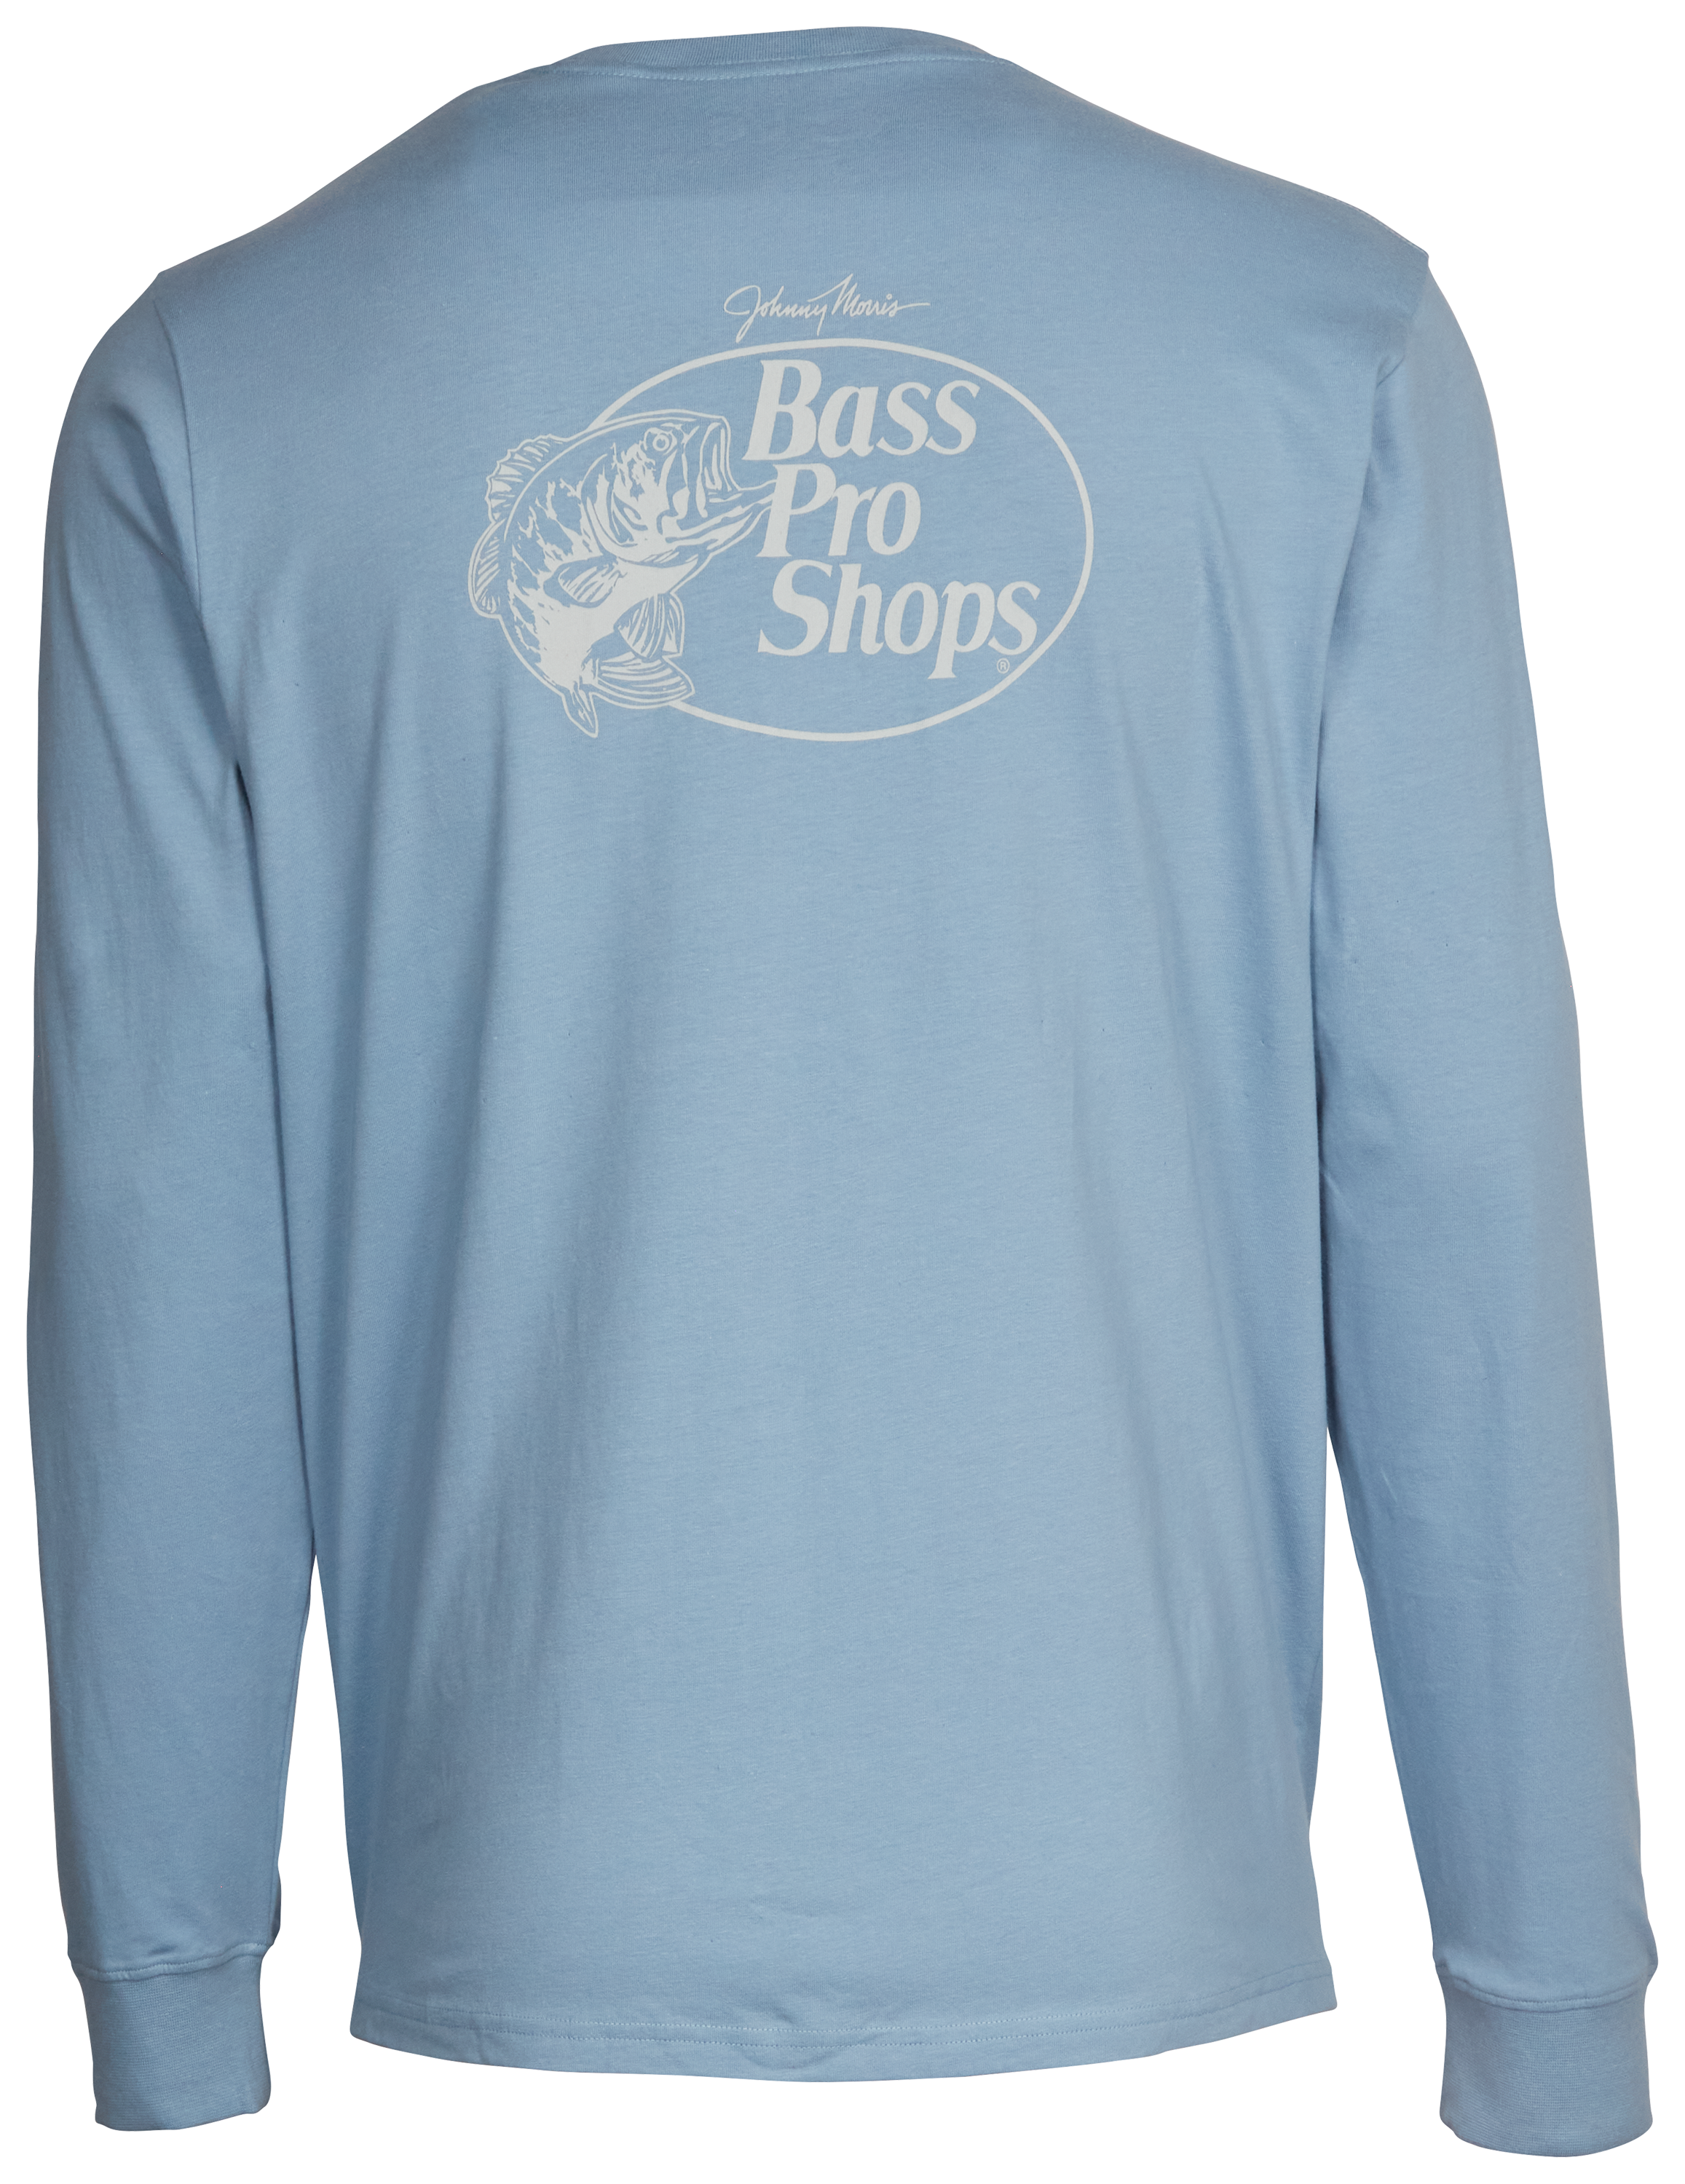 Bass Pro Shops Signature Series Long-Sleeve Performance Shirt for